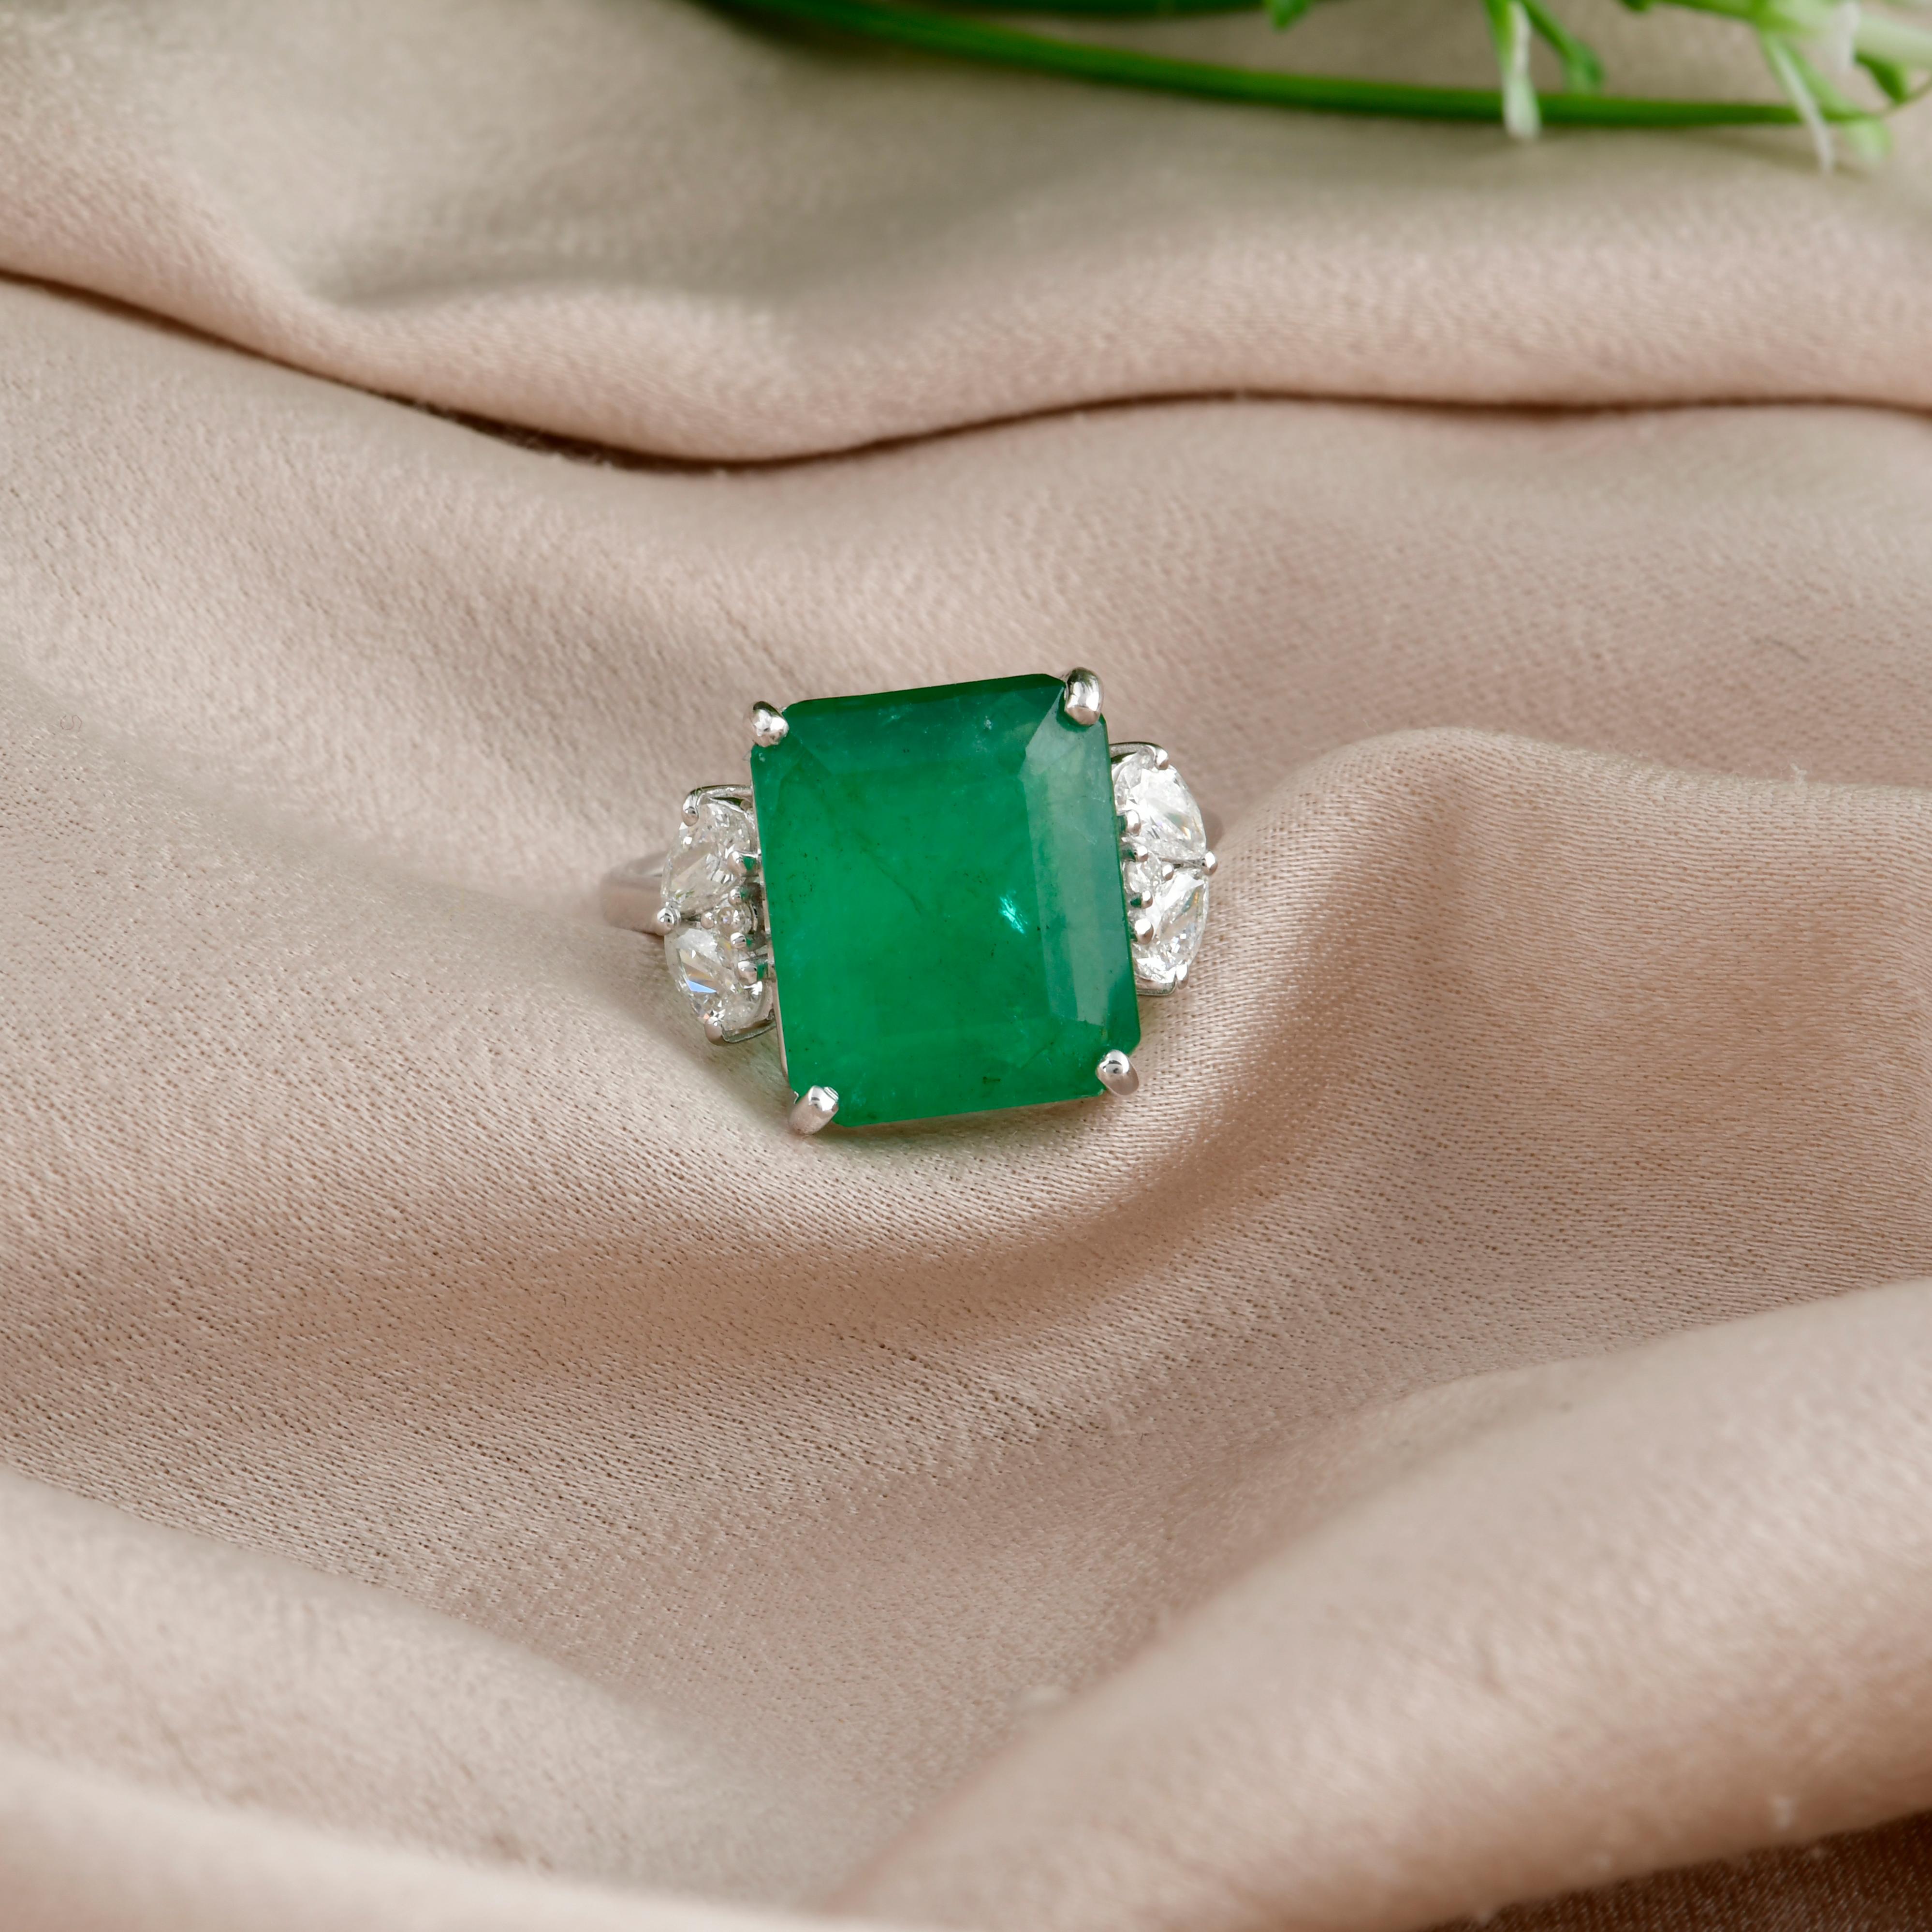 Women's Zambian Emerald Gemstone Cocktail Ring Diamond 18k White Gold Handmade Jewelry For Sale